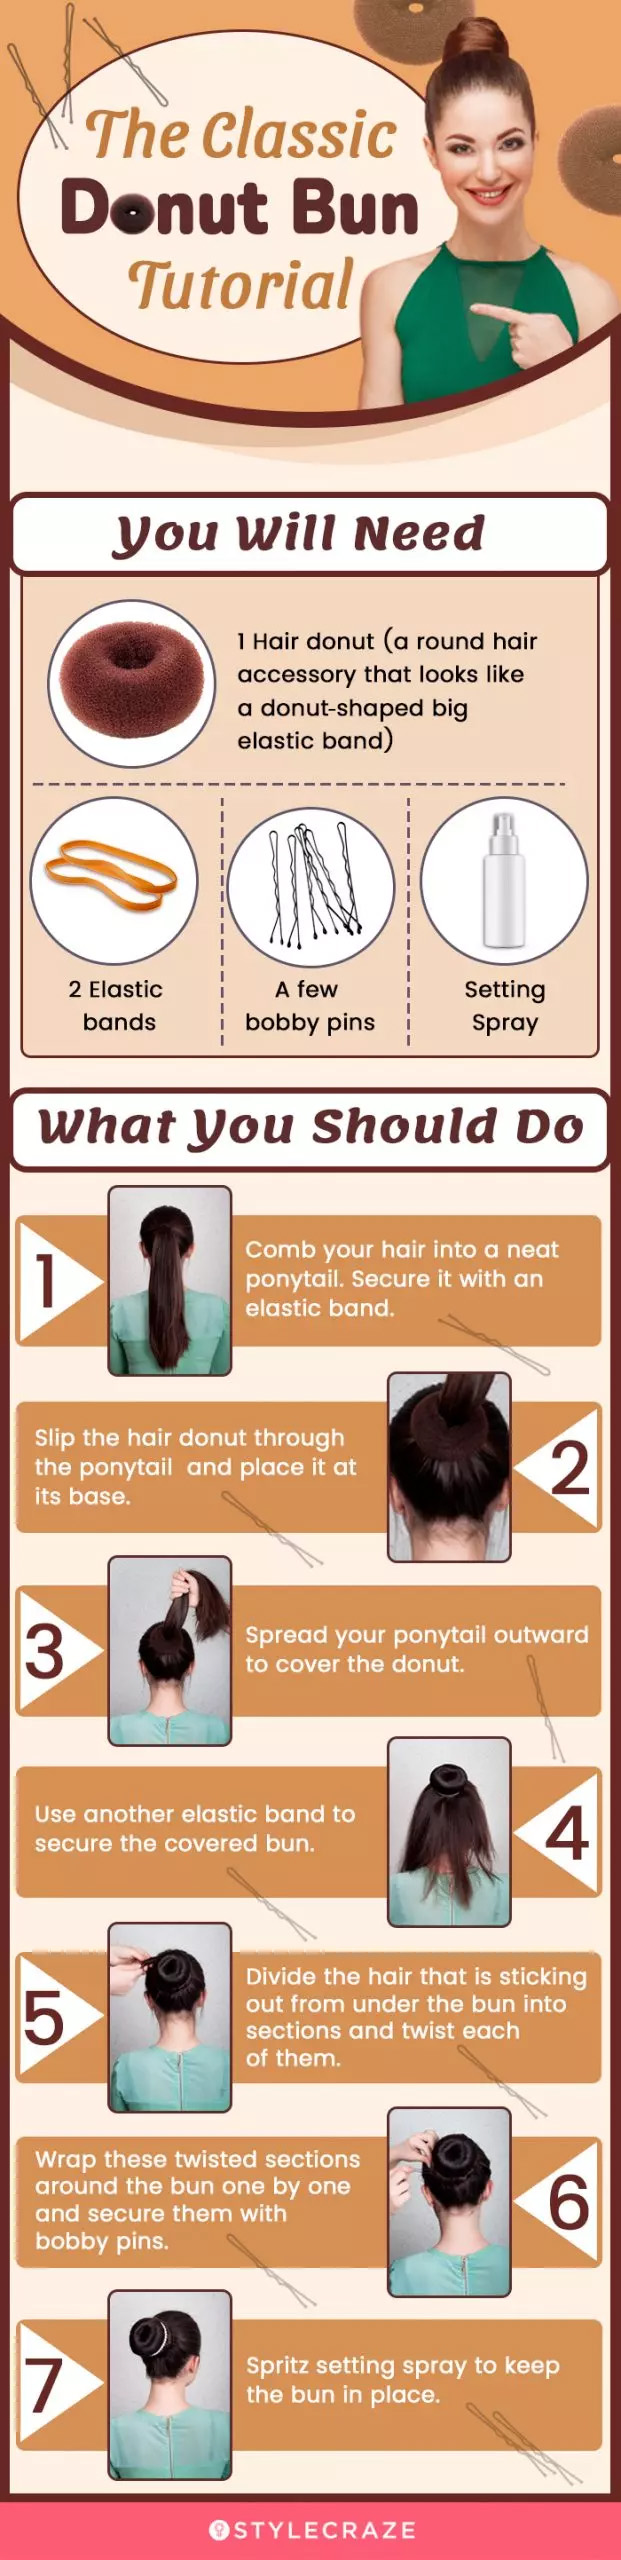 the classic donut bun tutorial (infographic)